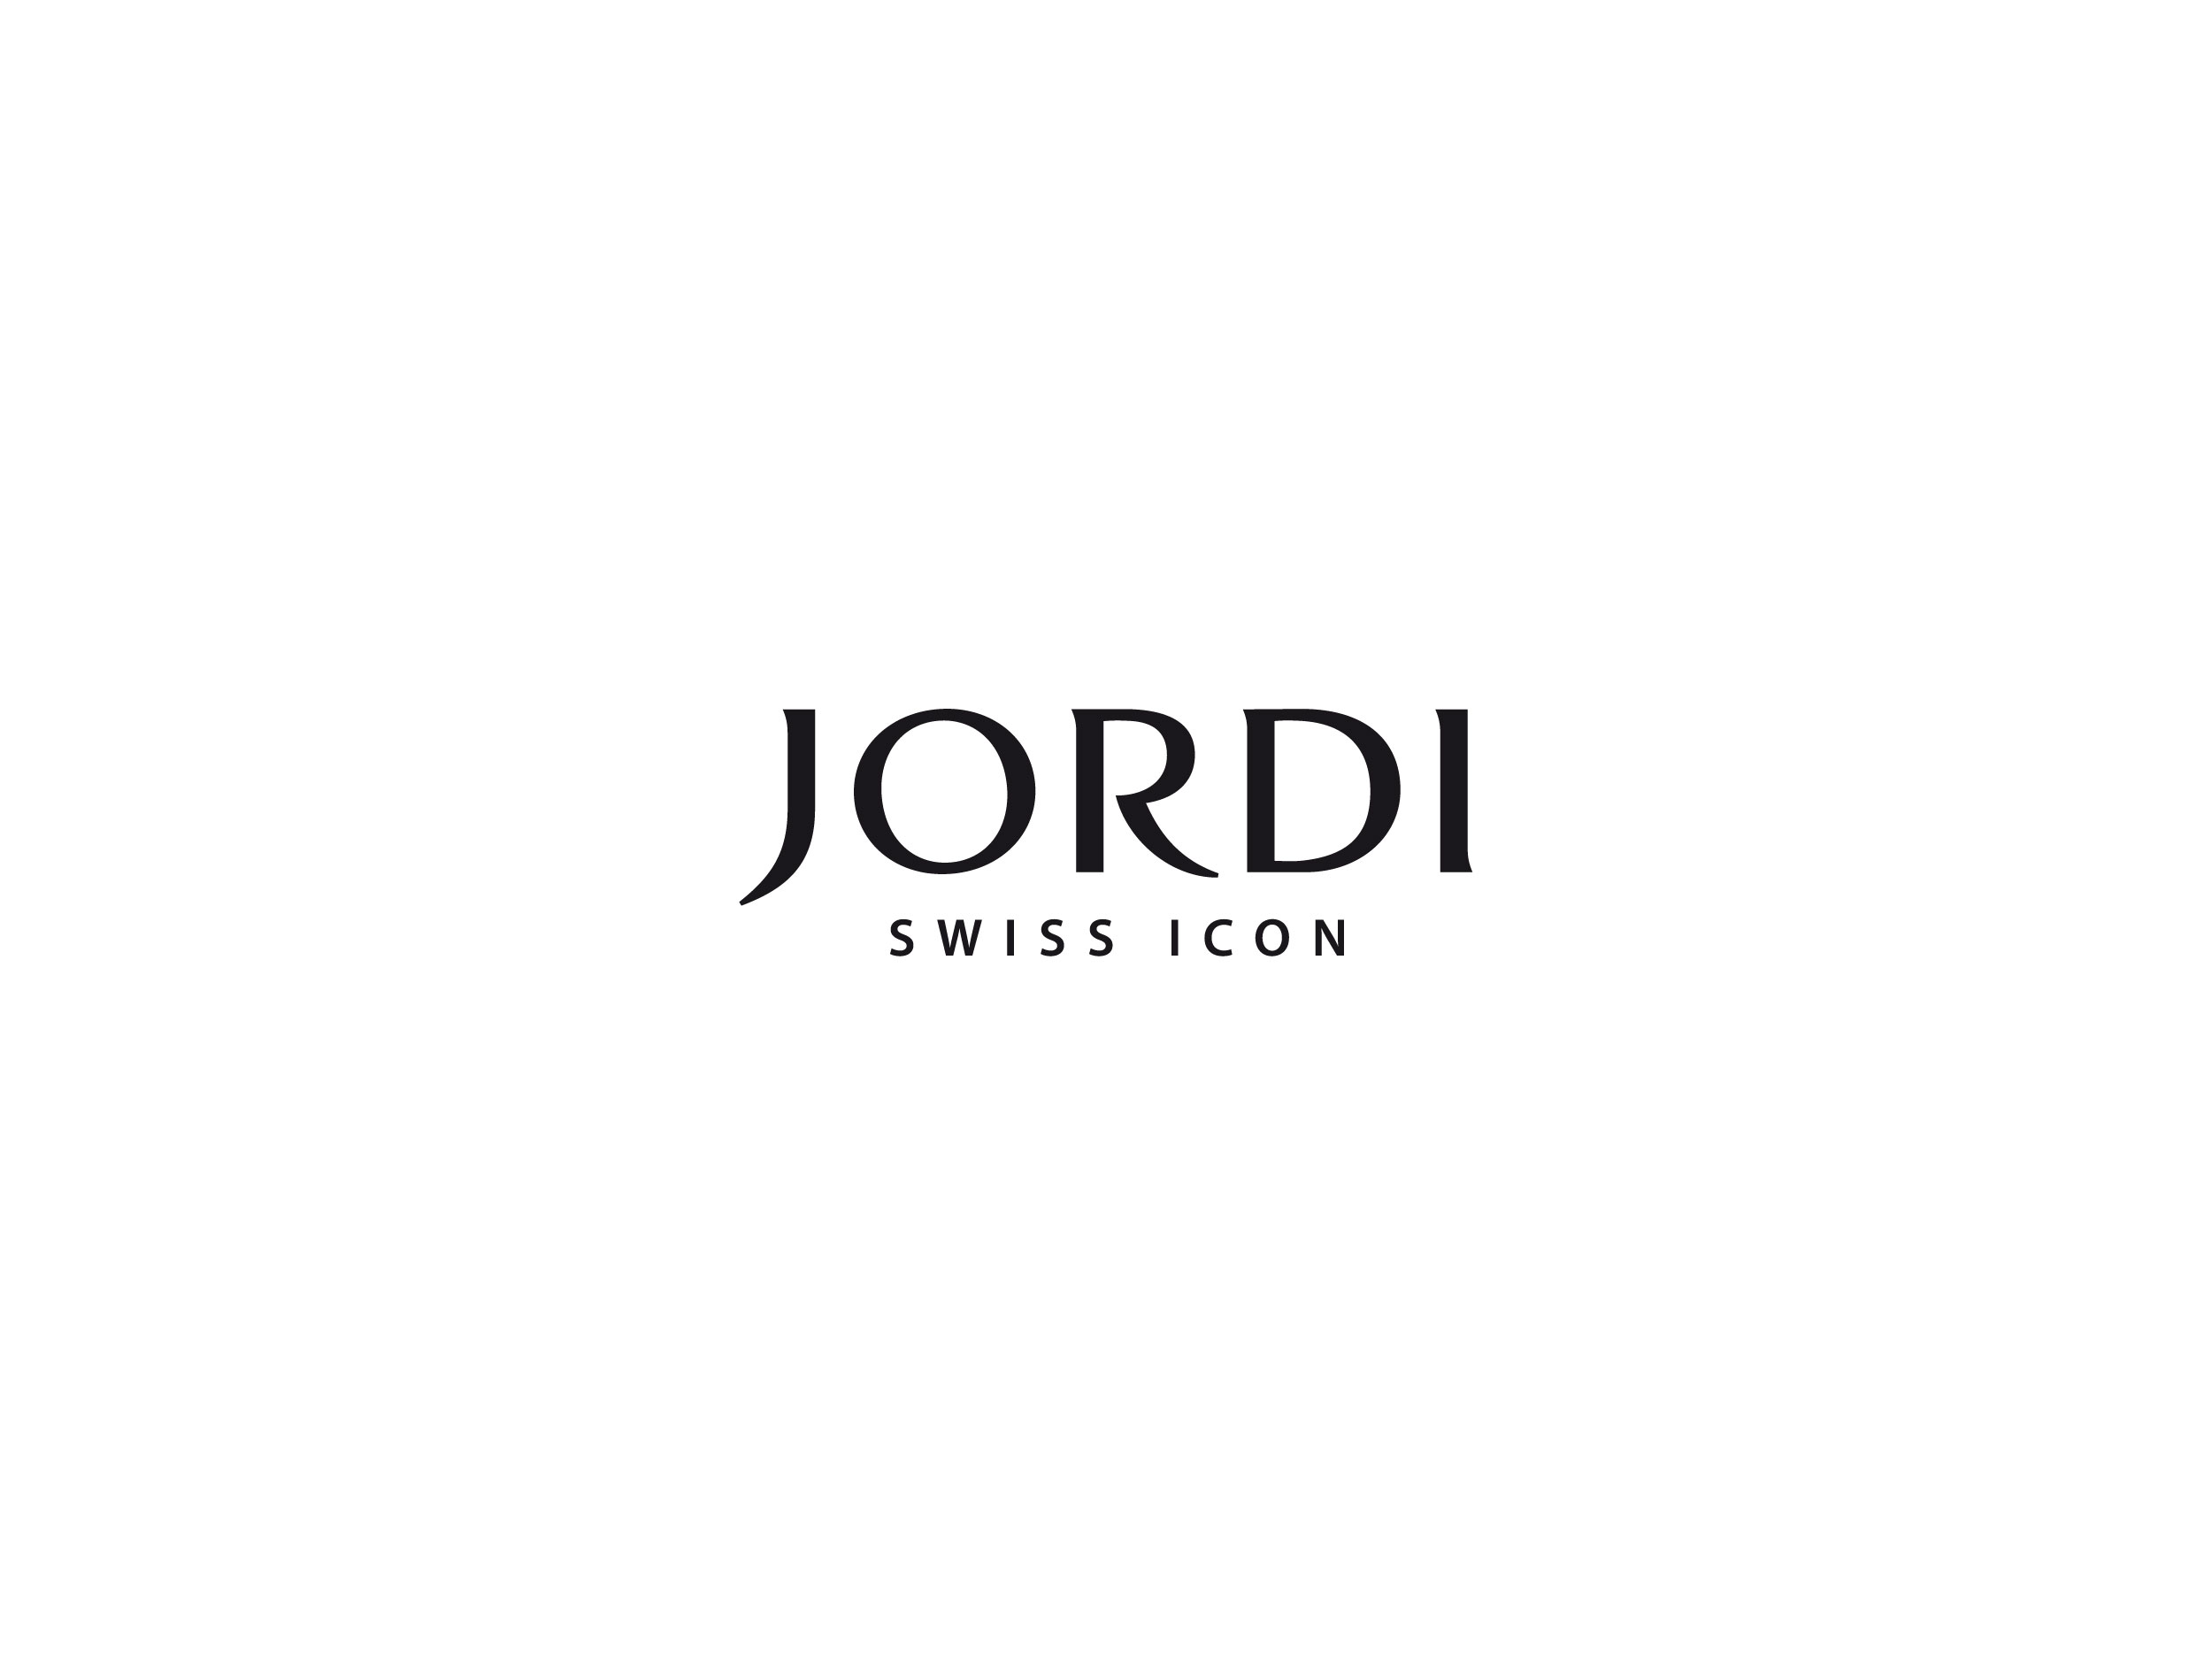 Jordi logo